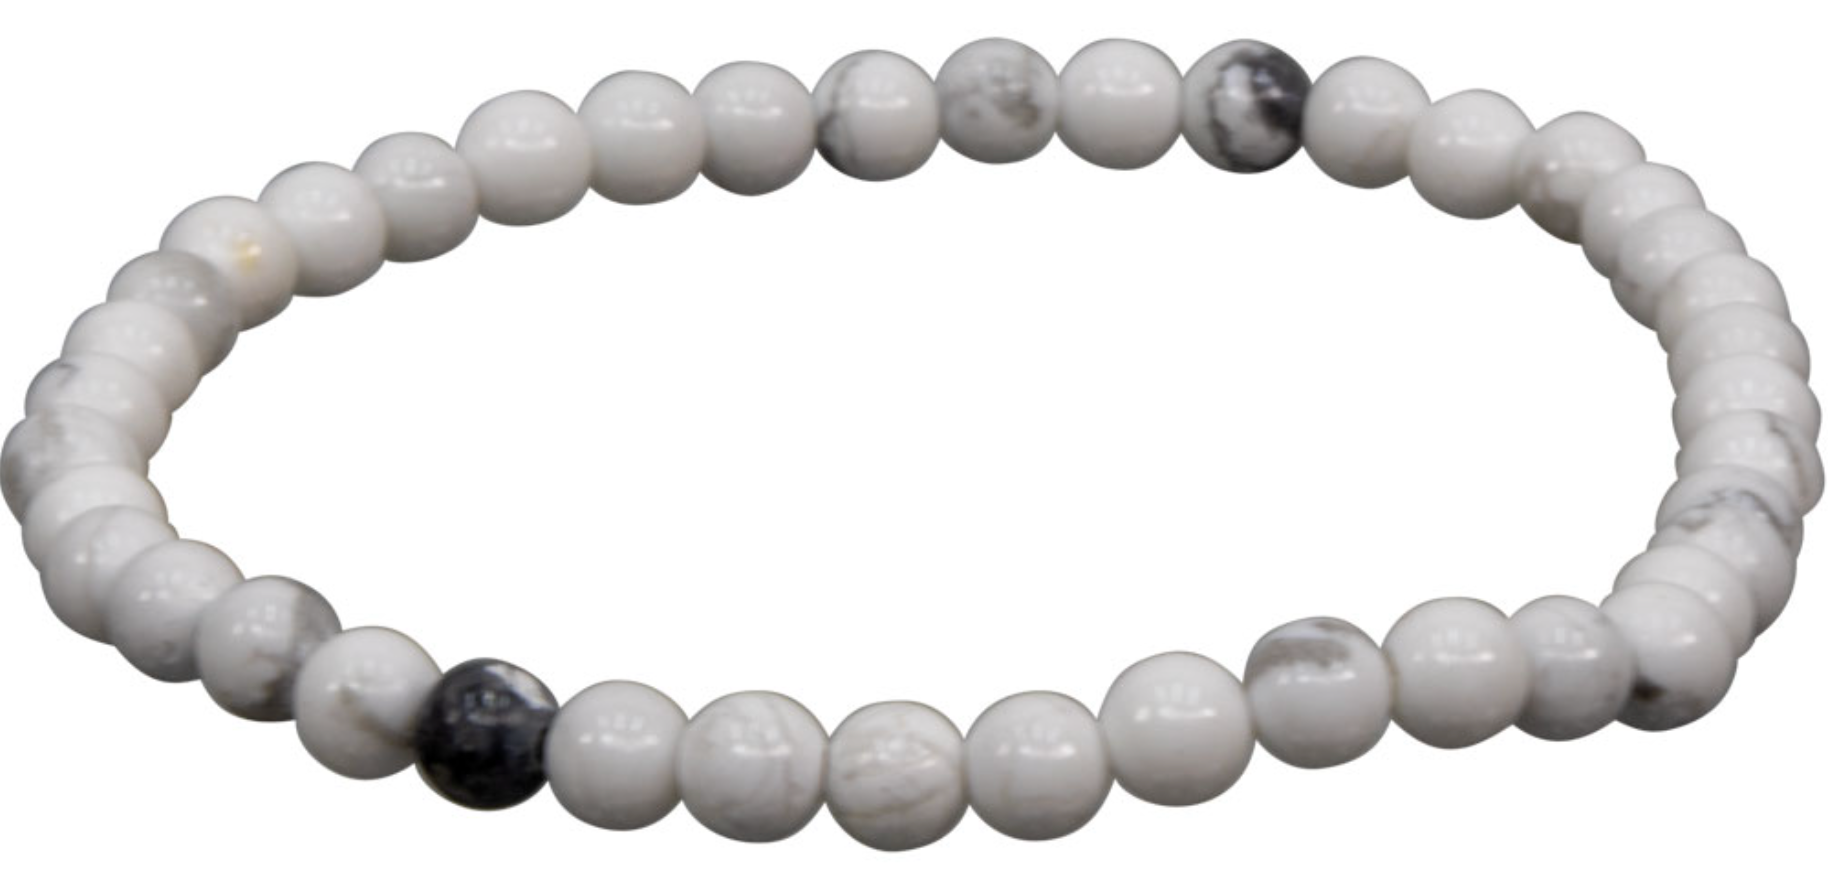 Solid Tone Stone Beads Charm Bracelet by Aloha 808: White